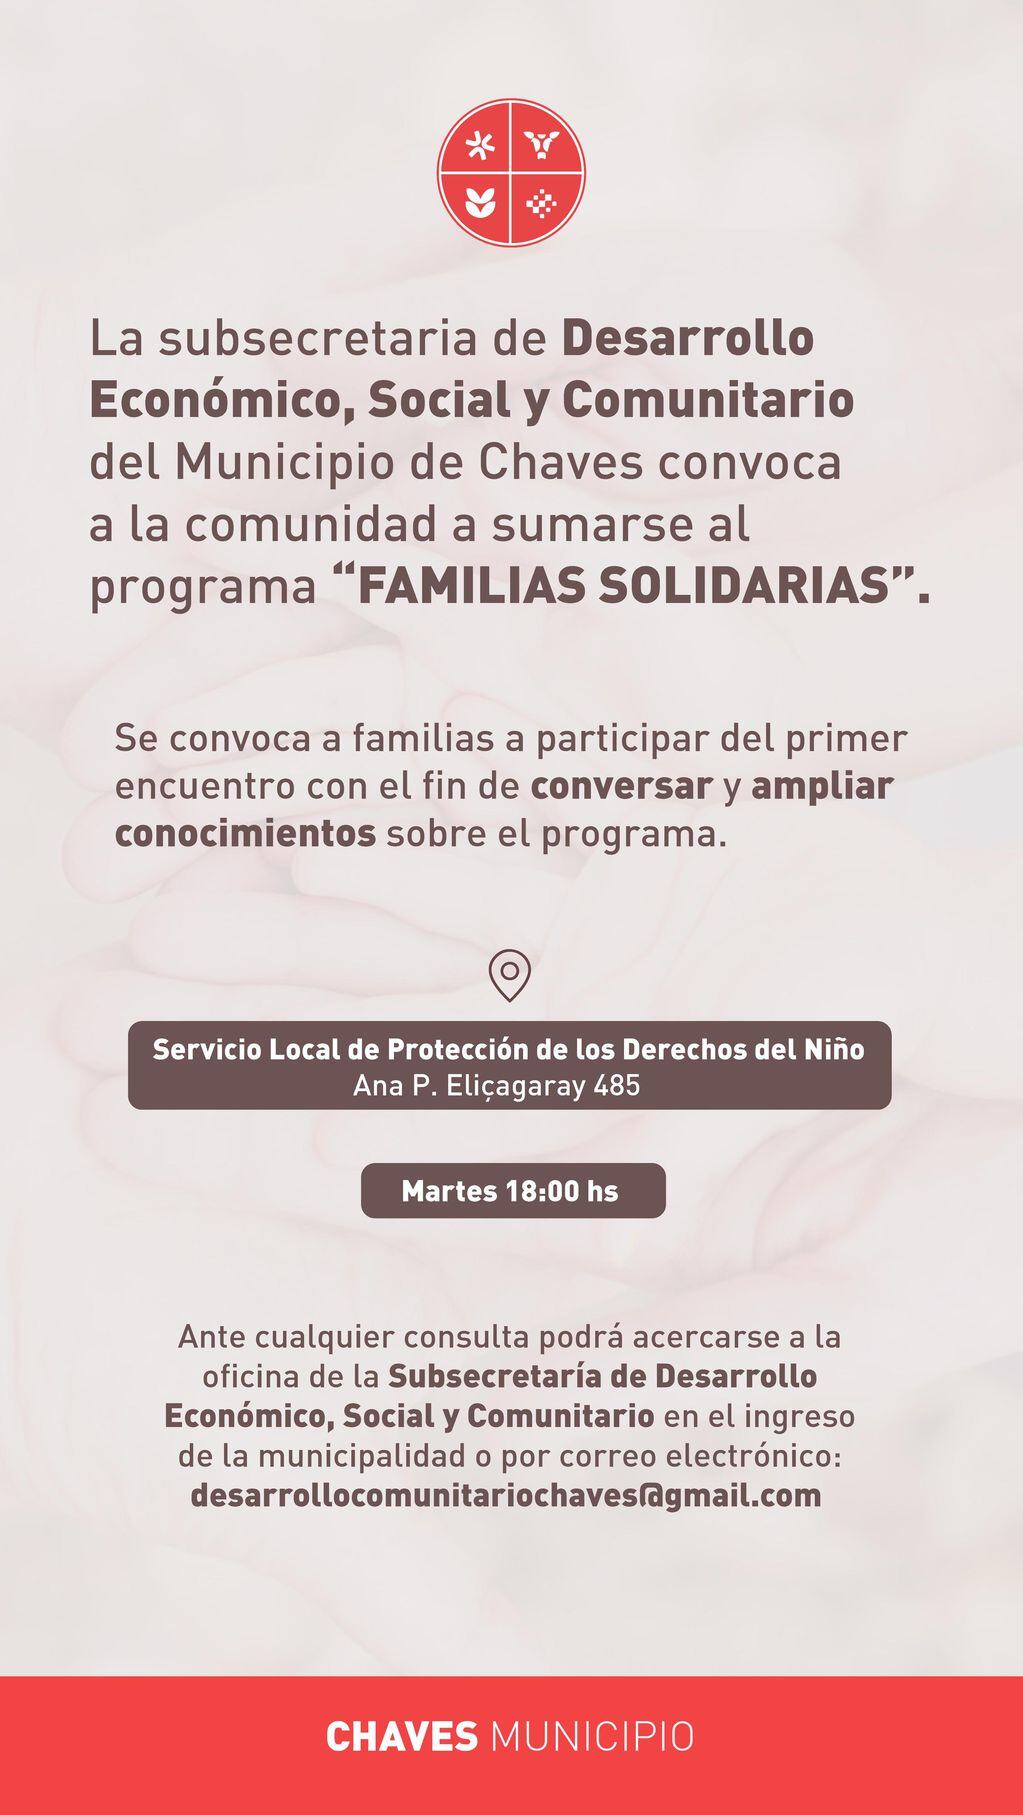 Programa “Familias Solidarias”